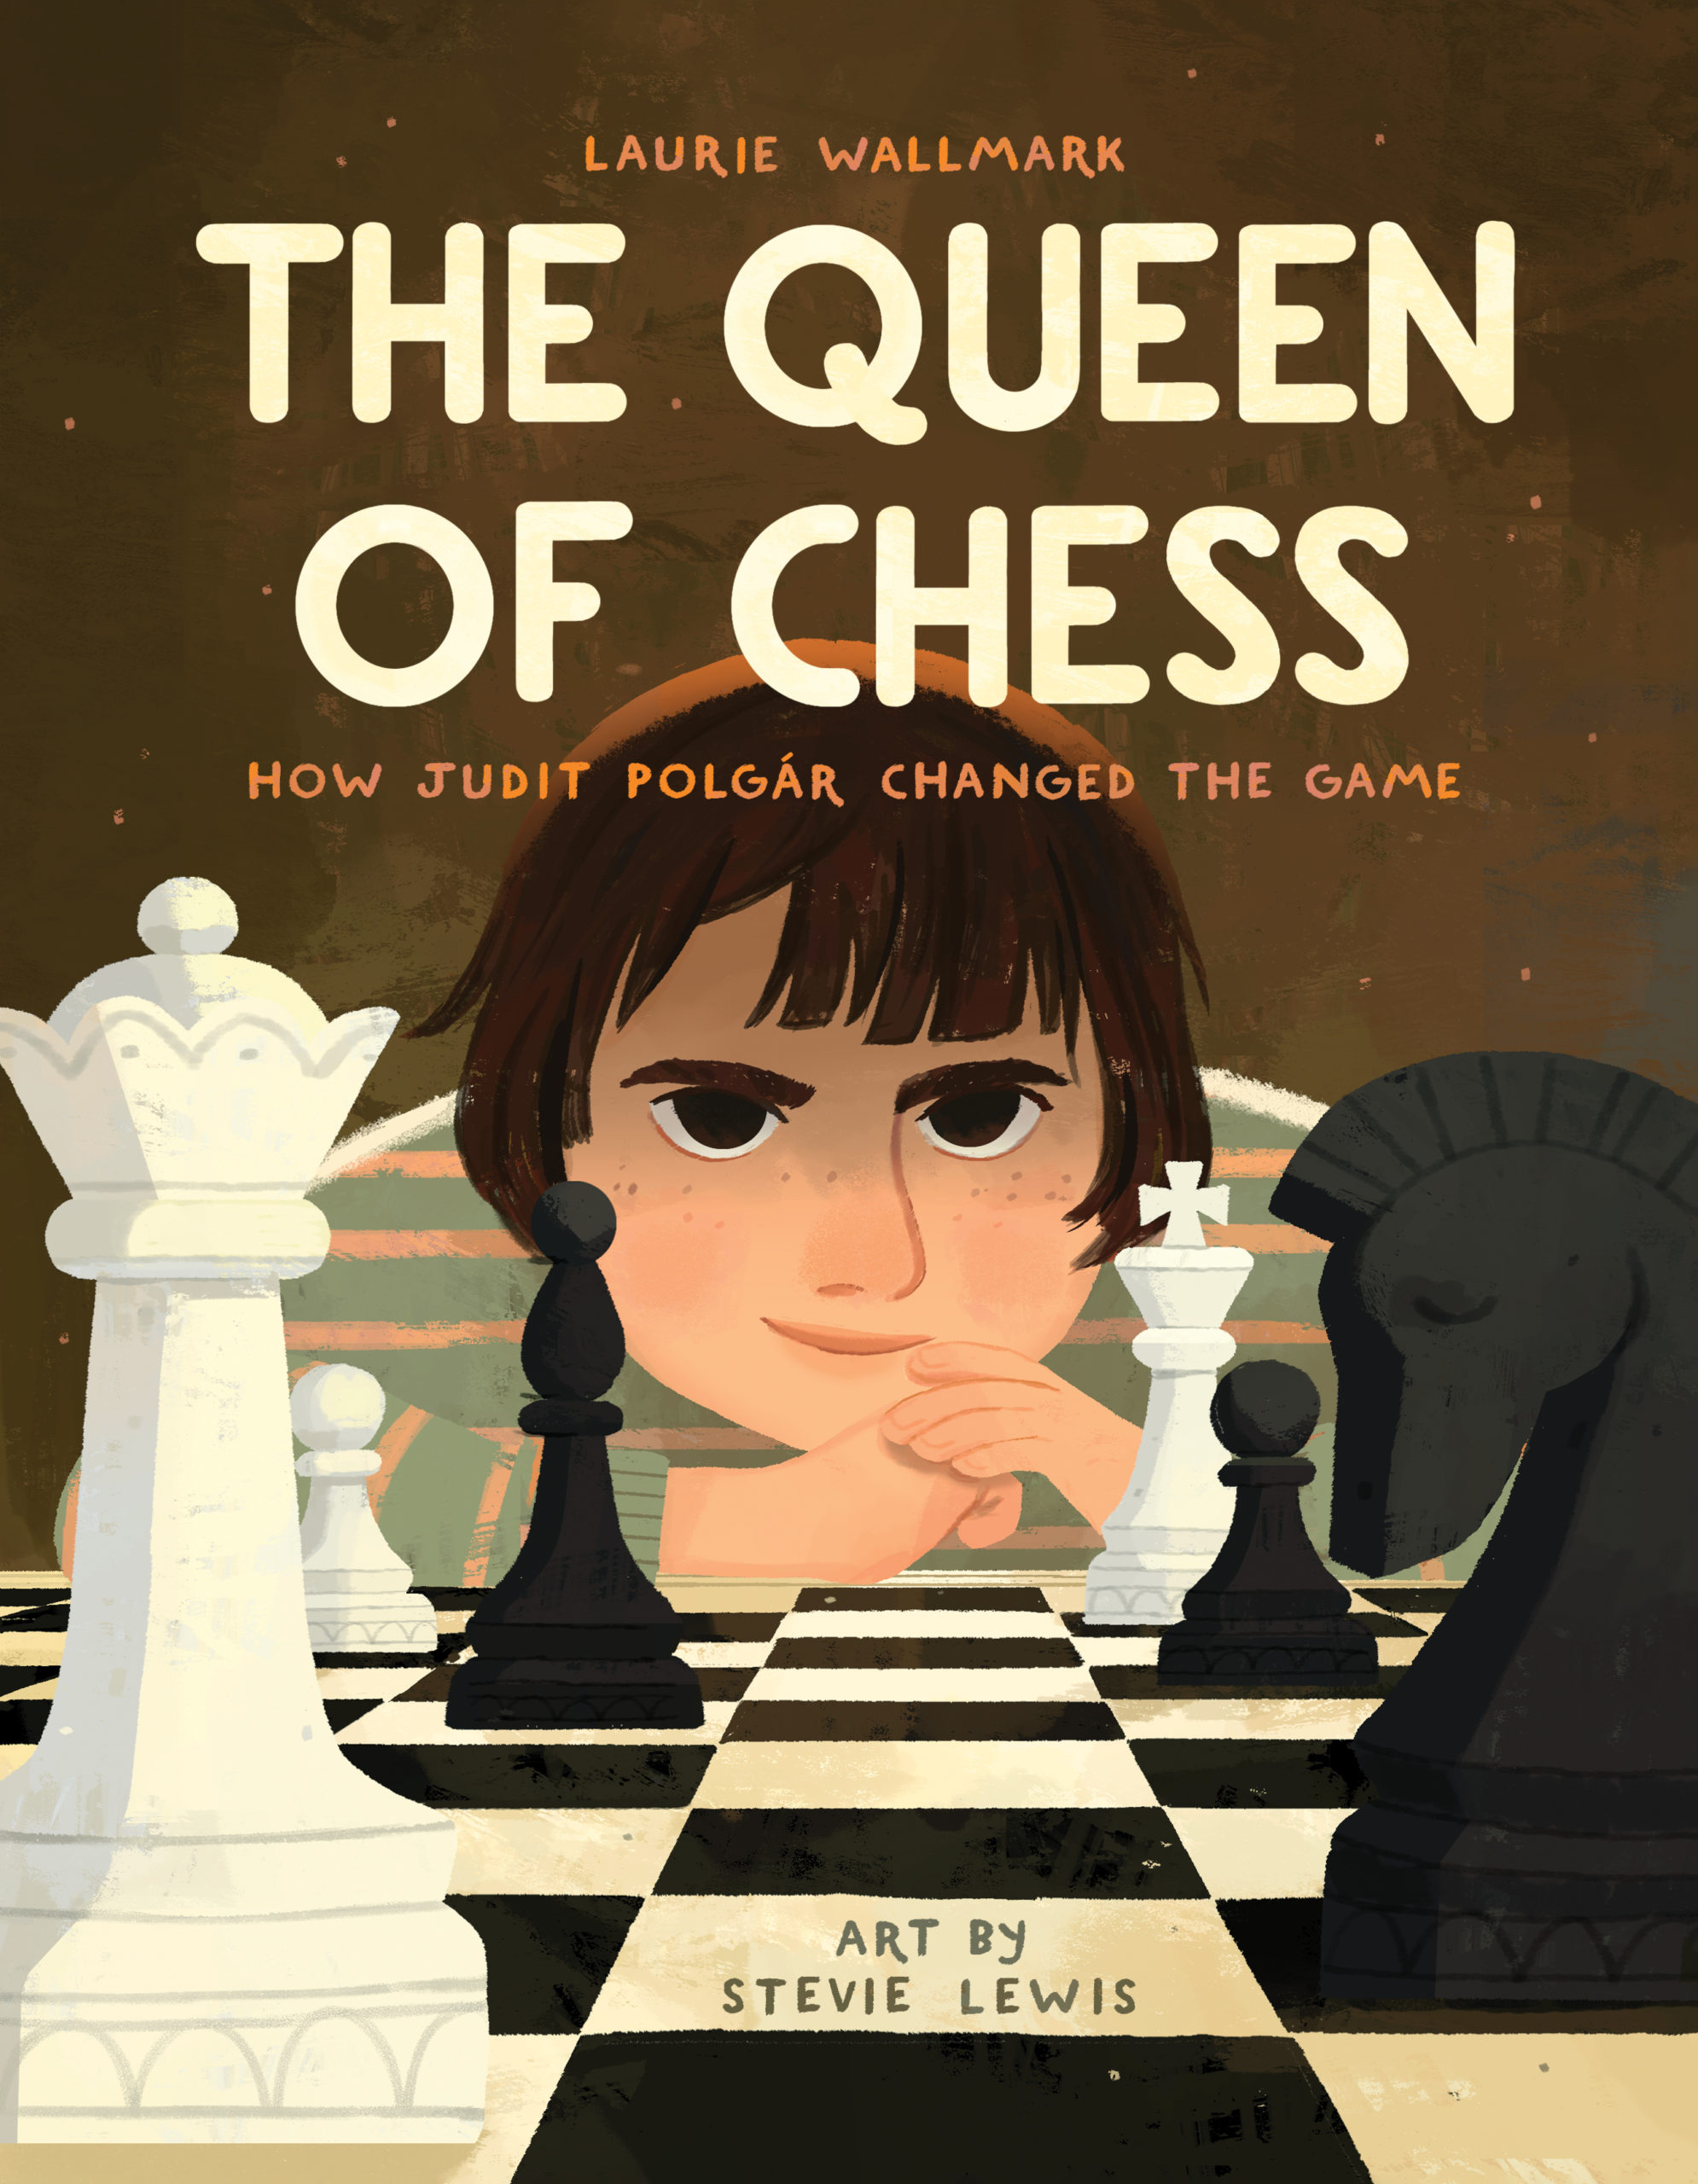 The chess games of Judit Polgar